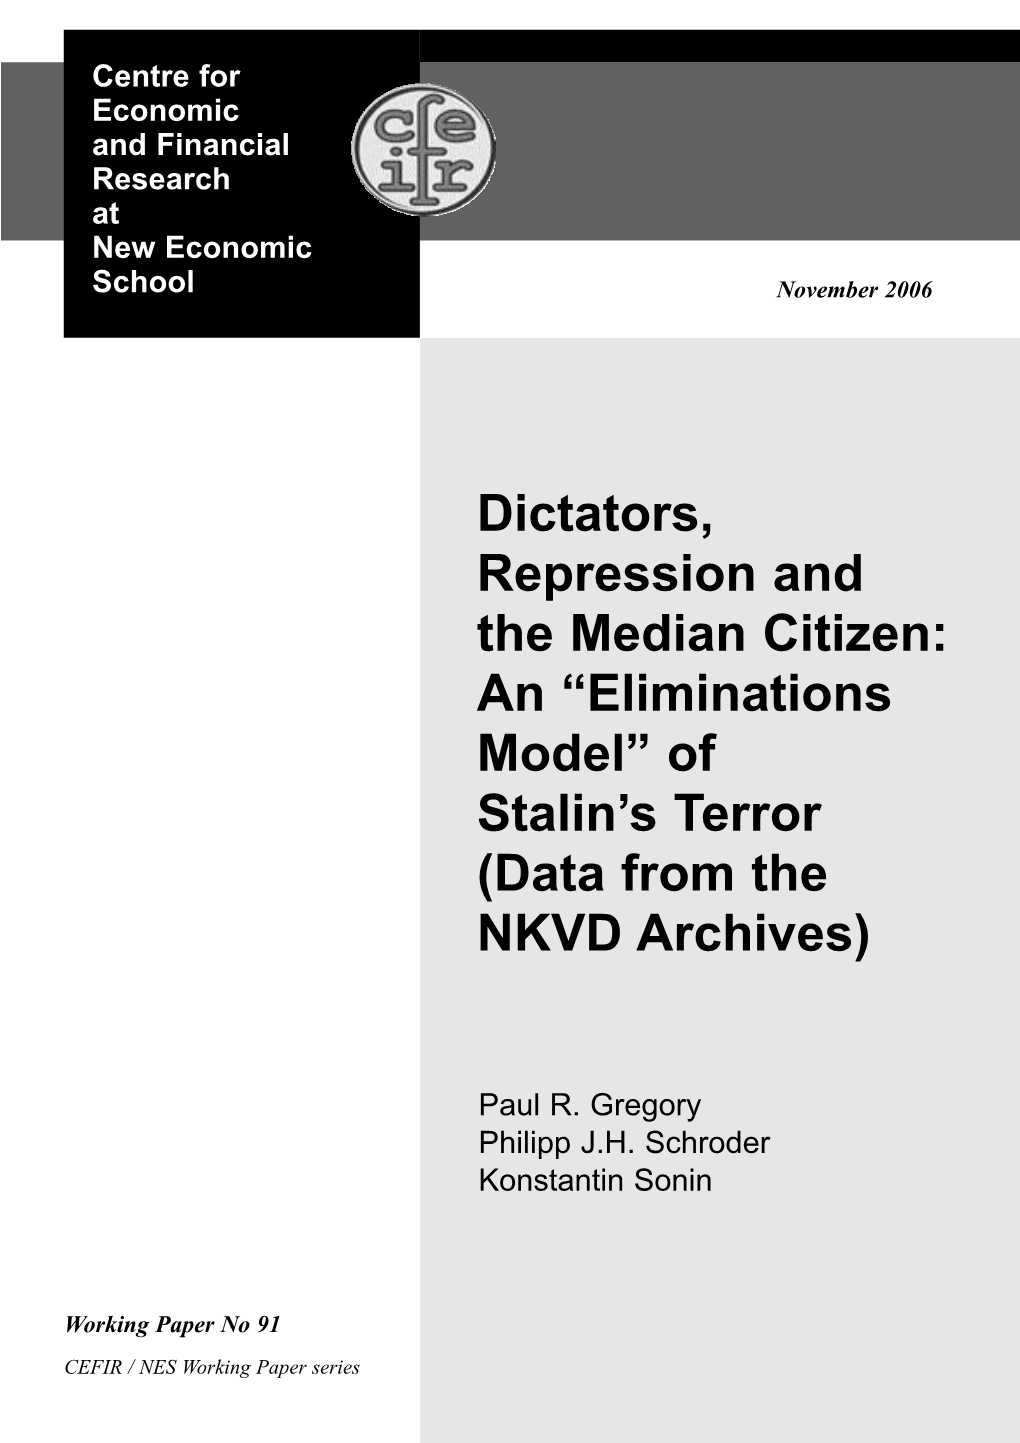 “Eliminations Model” of Stalin's Terror (Data from the NKVD Archives)